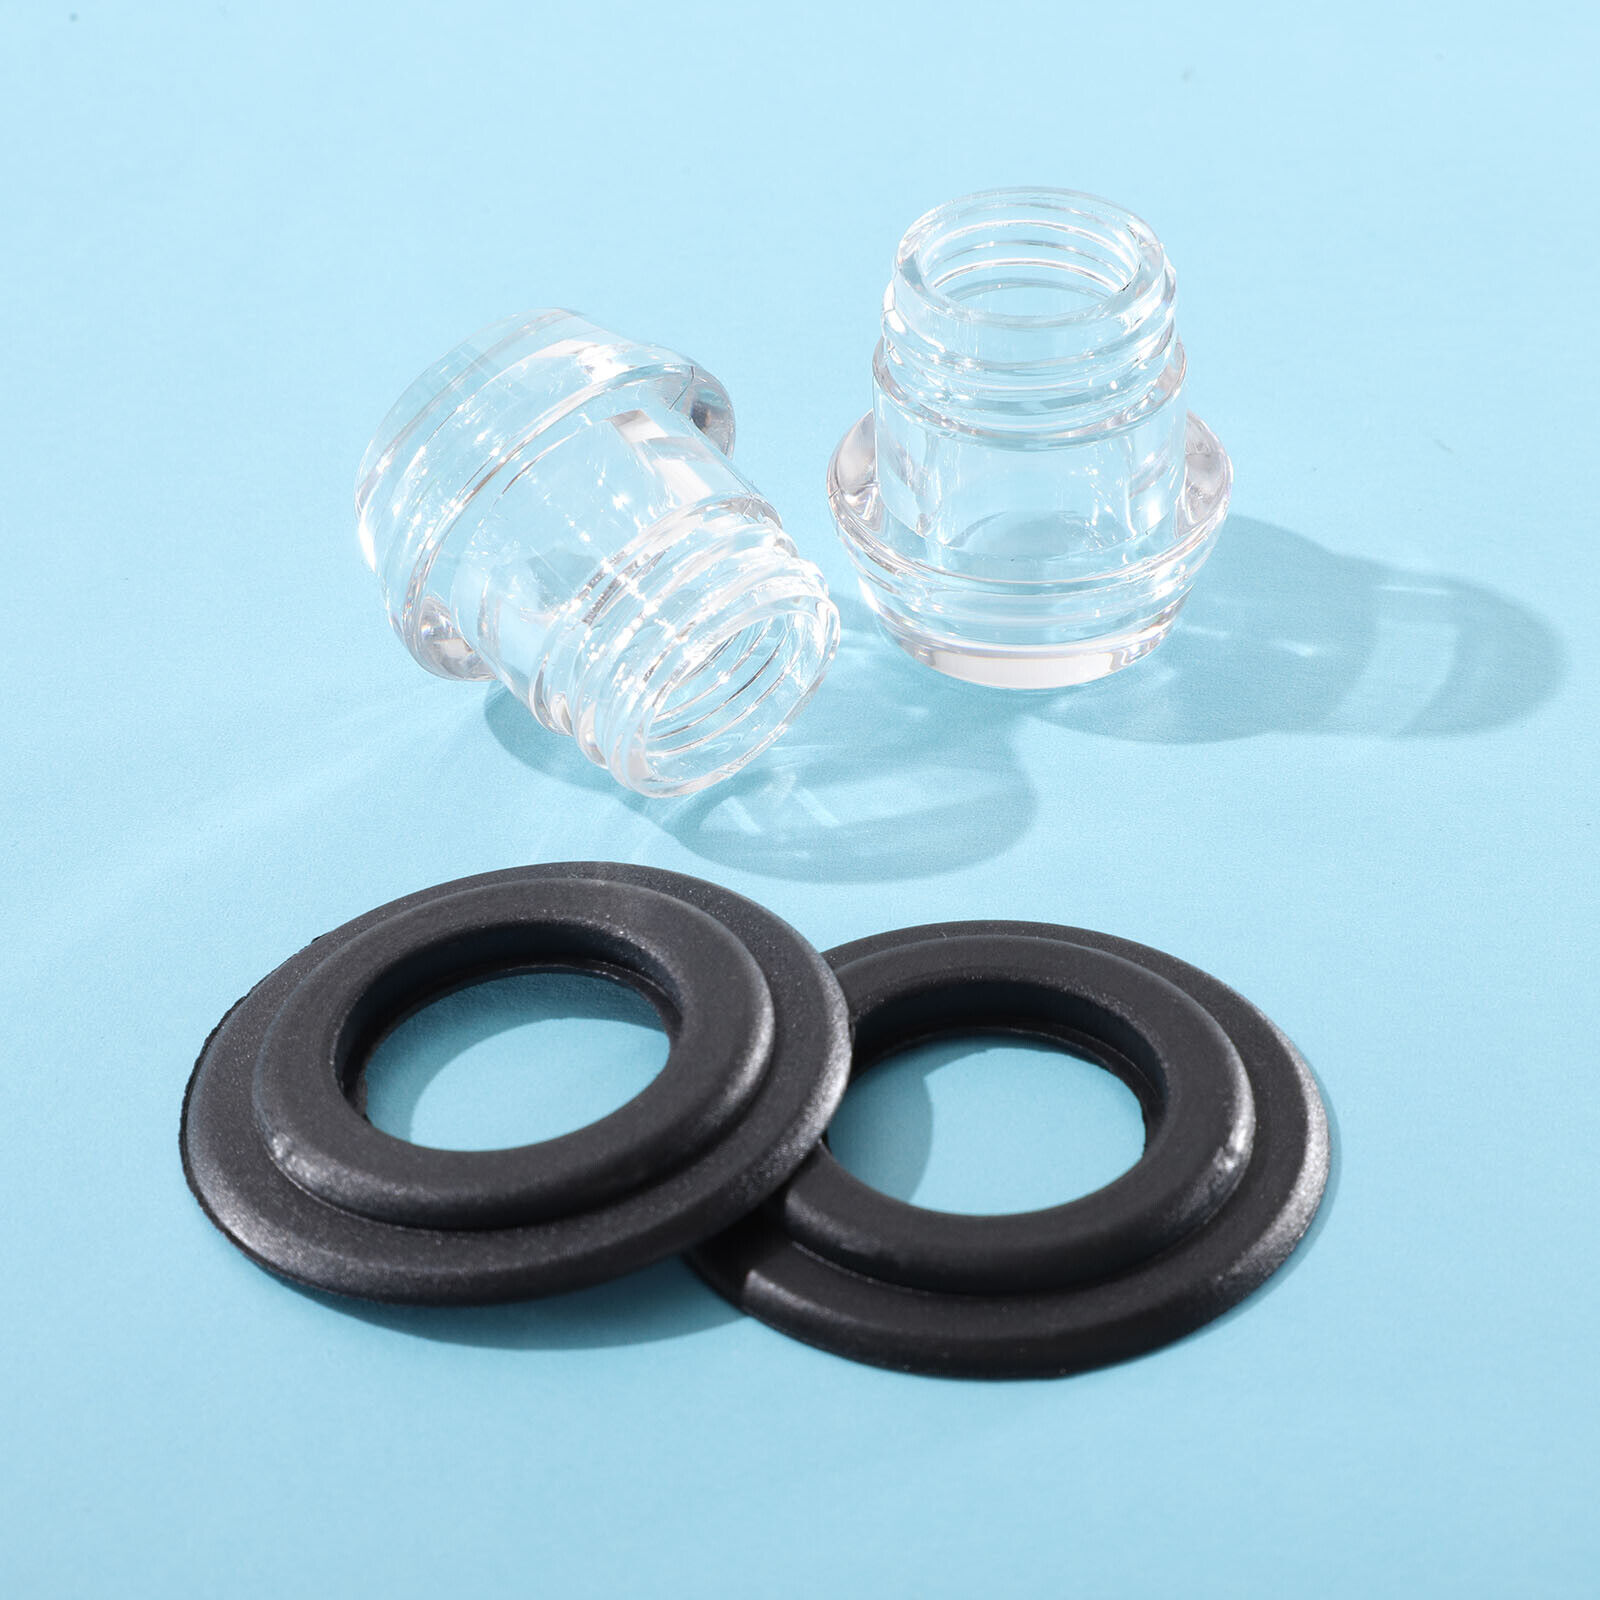 2Pcs Plastic Knob Top and Washer Ring,for Most Coffee Percolators Pot Top